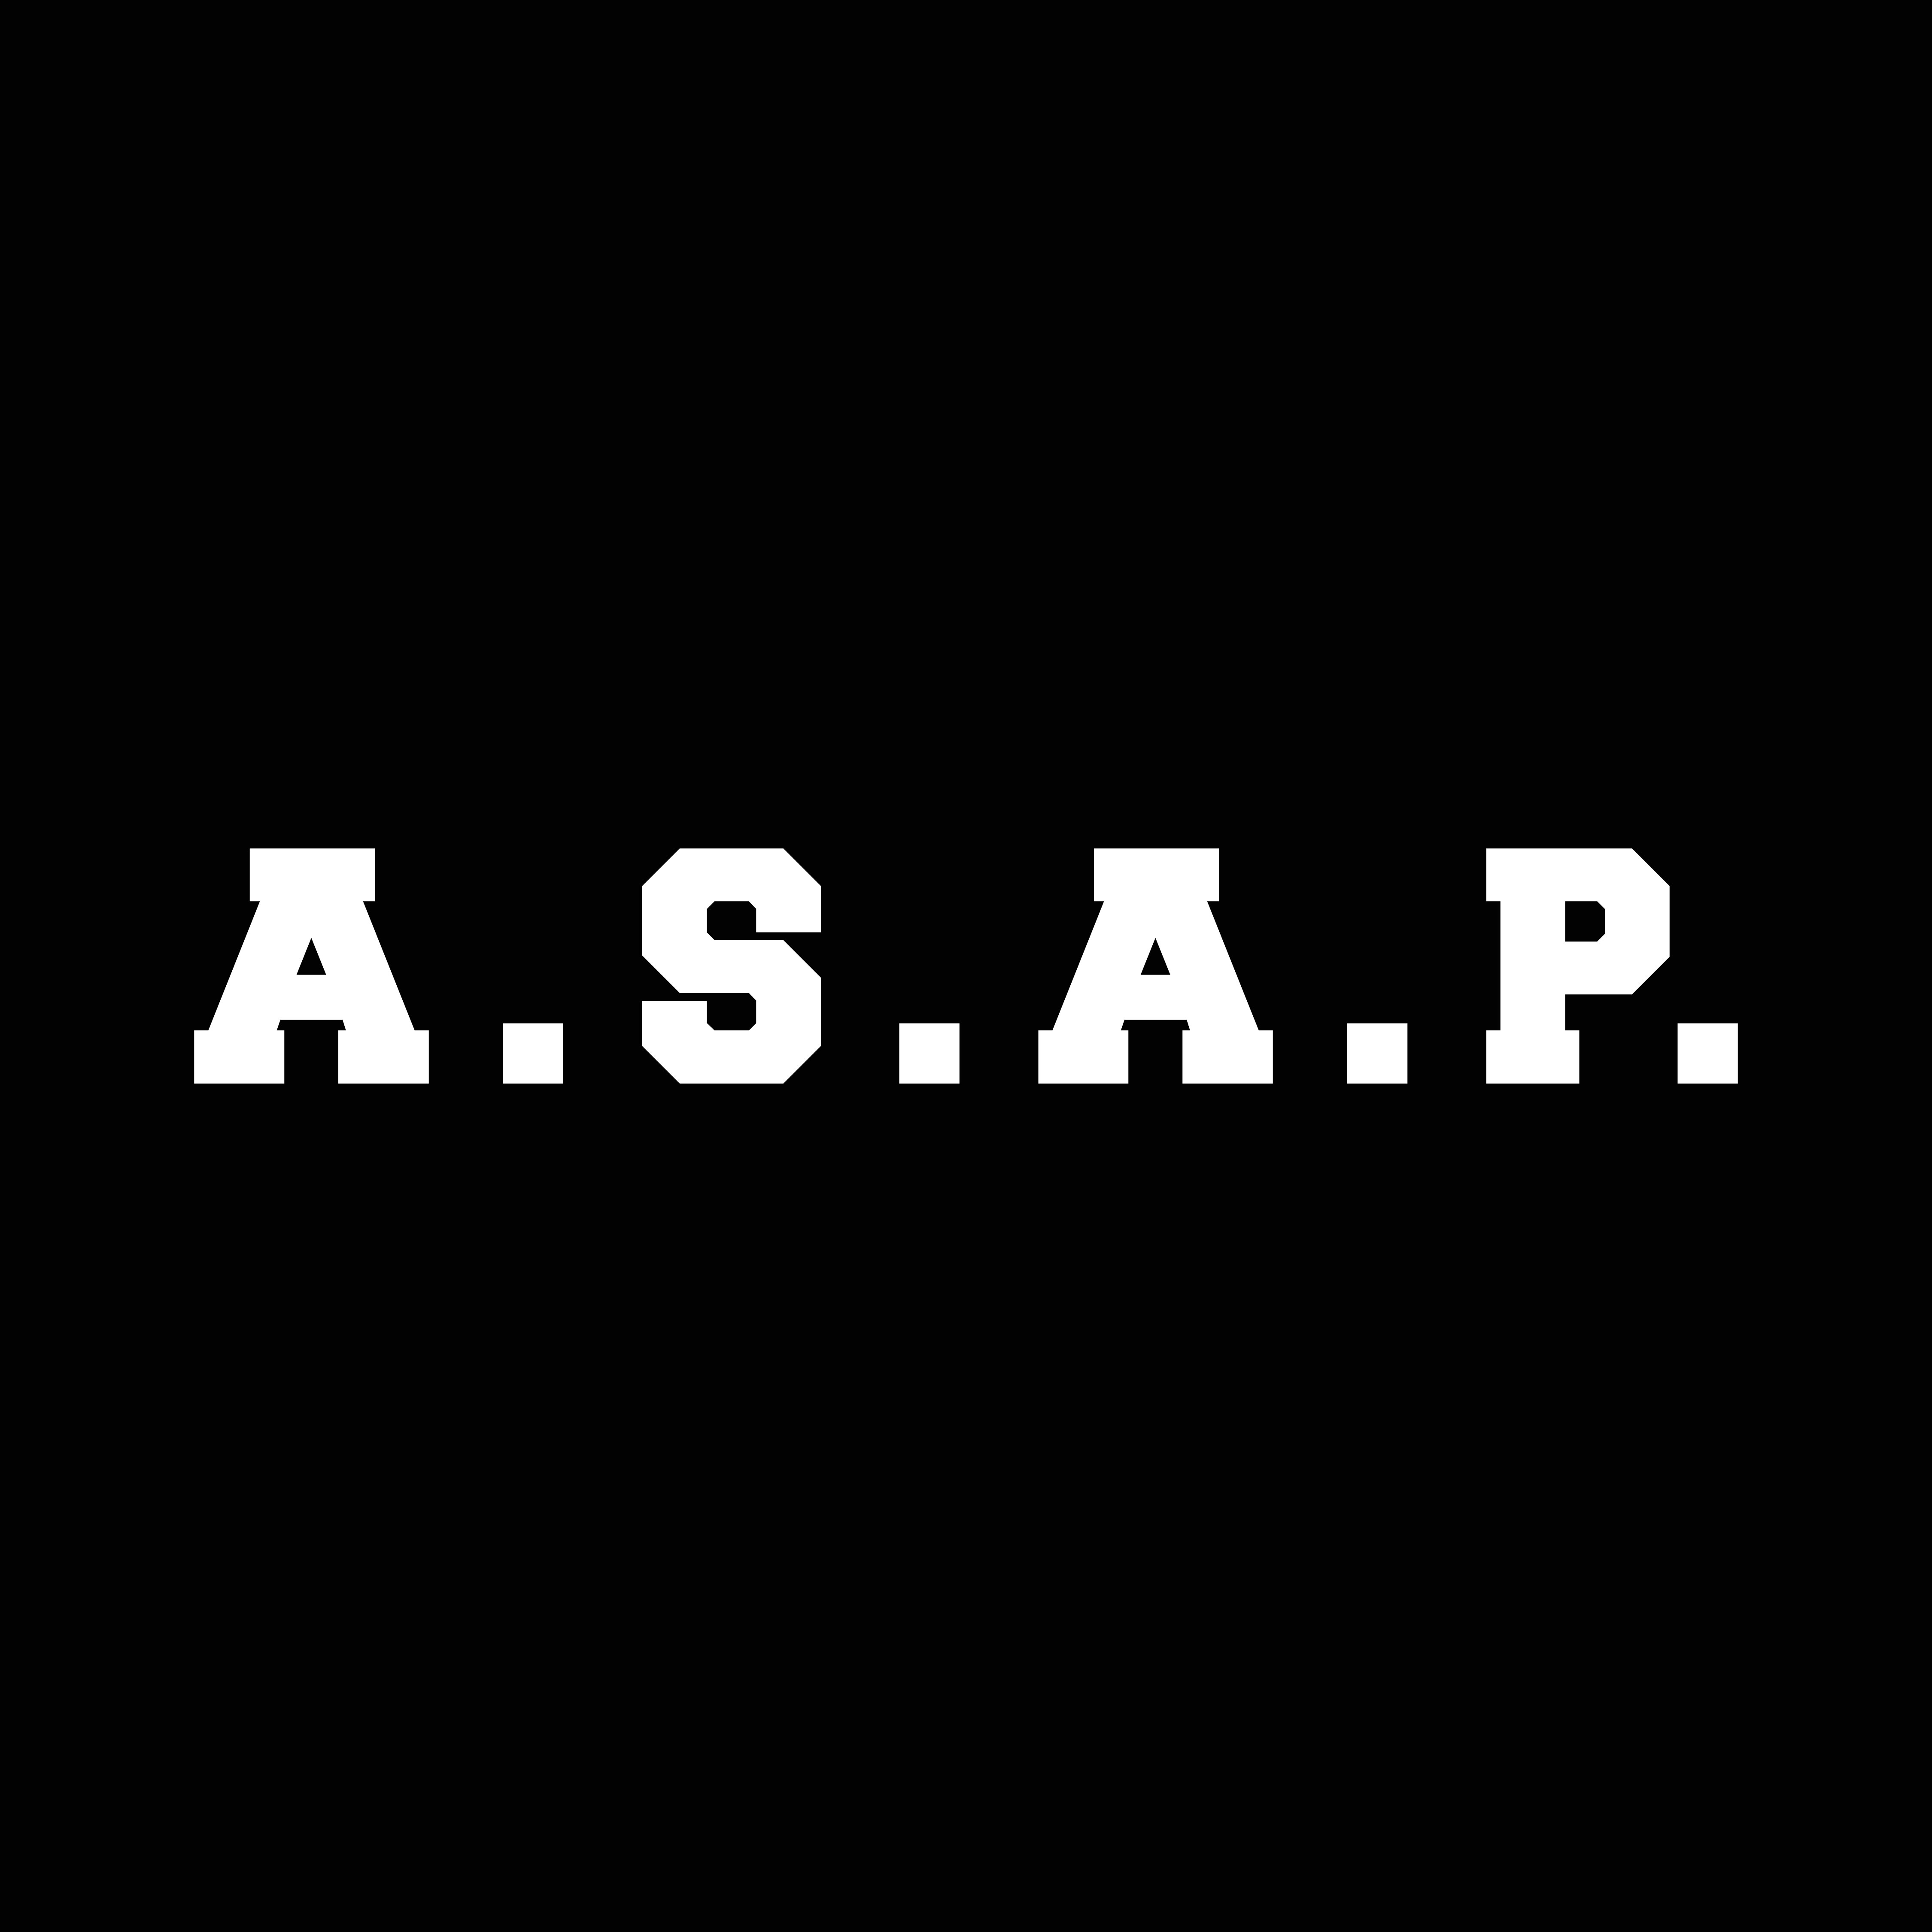 A.S.A.P